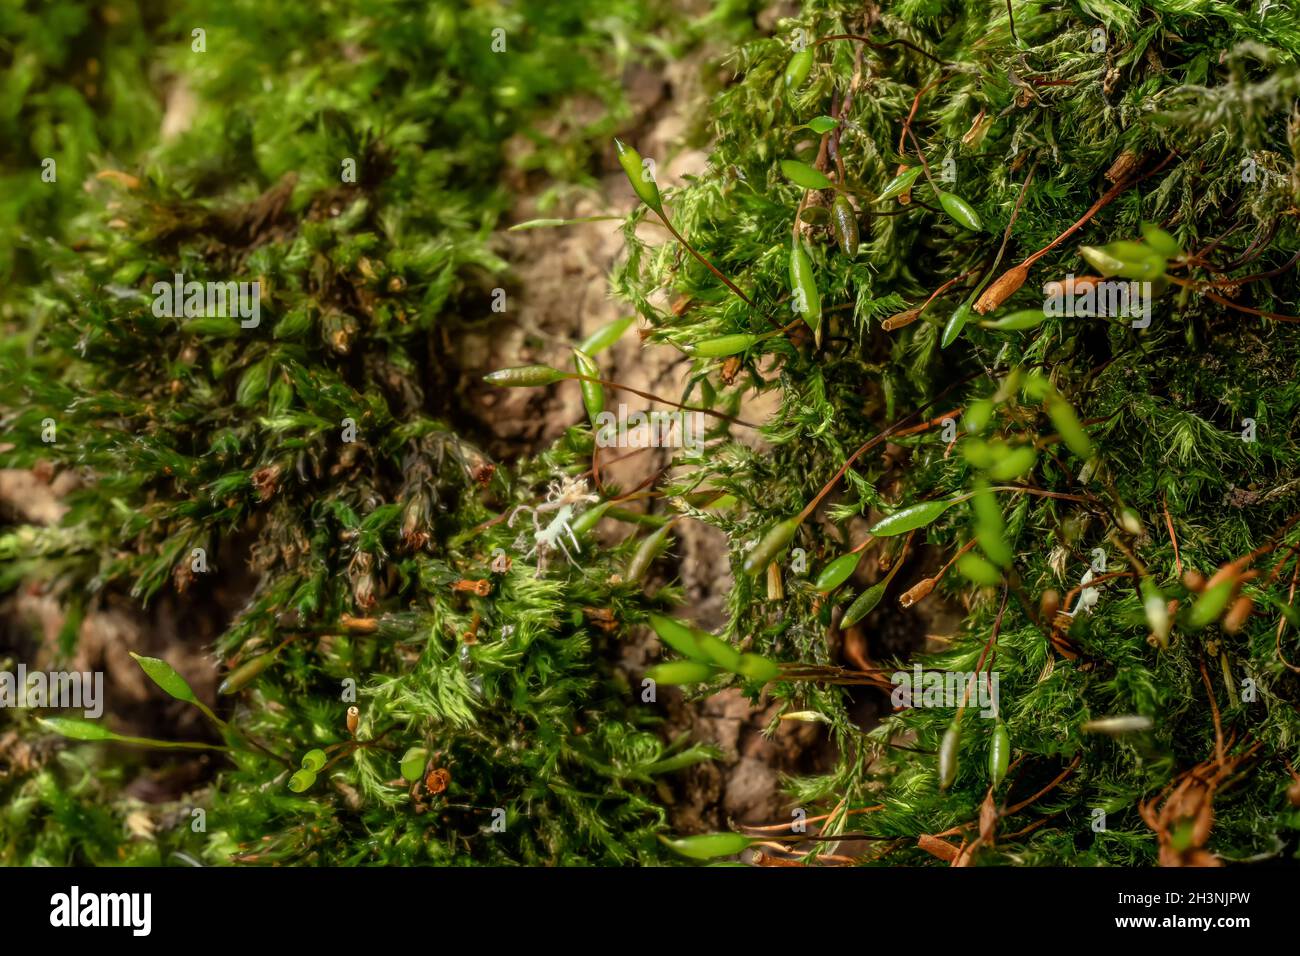 Fine green moss, - Brachytheciastrum velutinum species - growing on tree bark , closeup detail Stock Photo